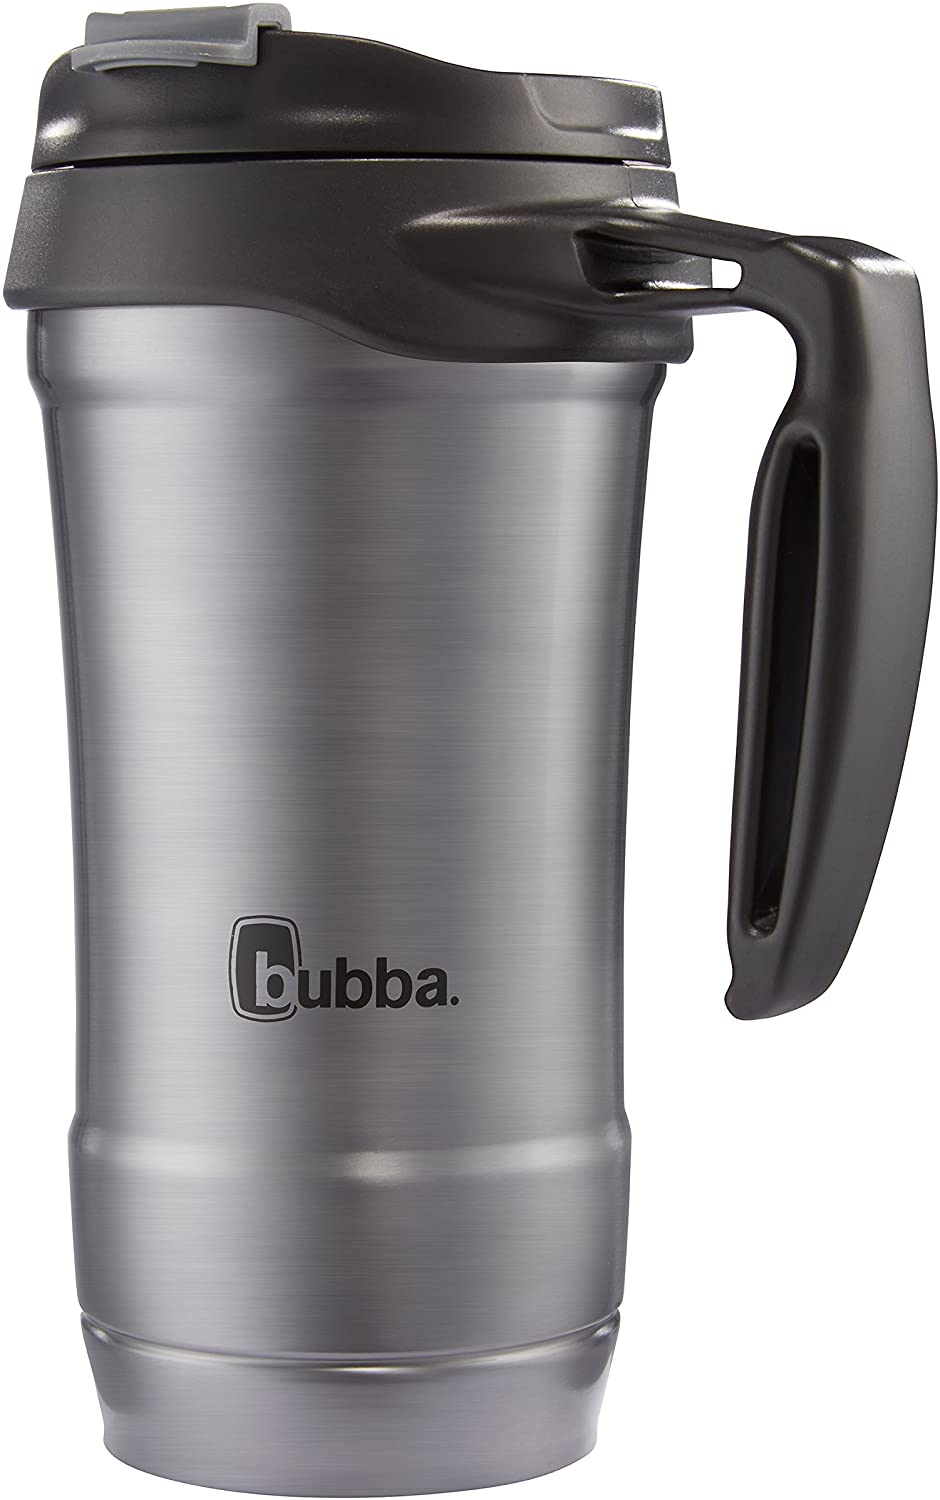 bubba Hero Double Walled Travel Coffee Mug, 18-Ounce